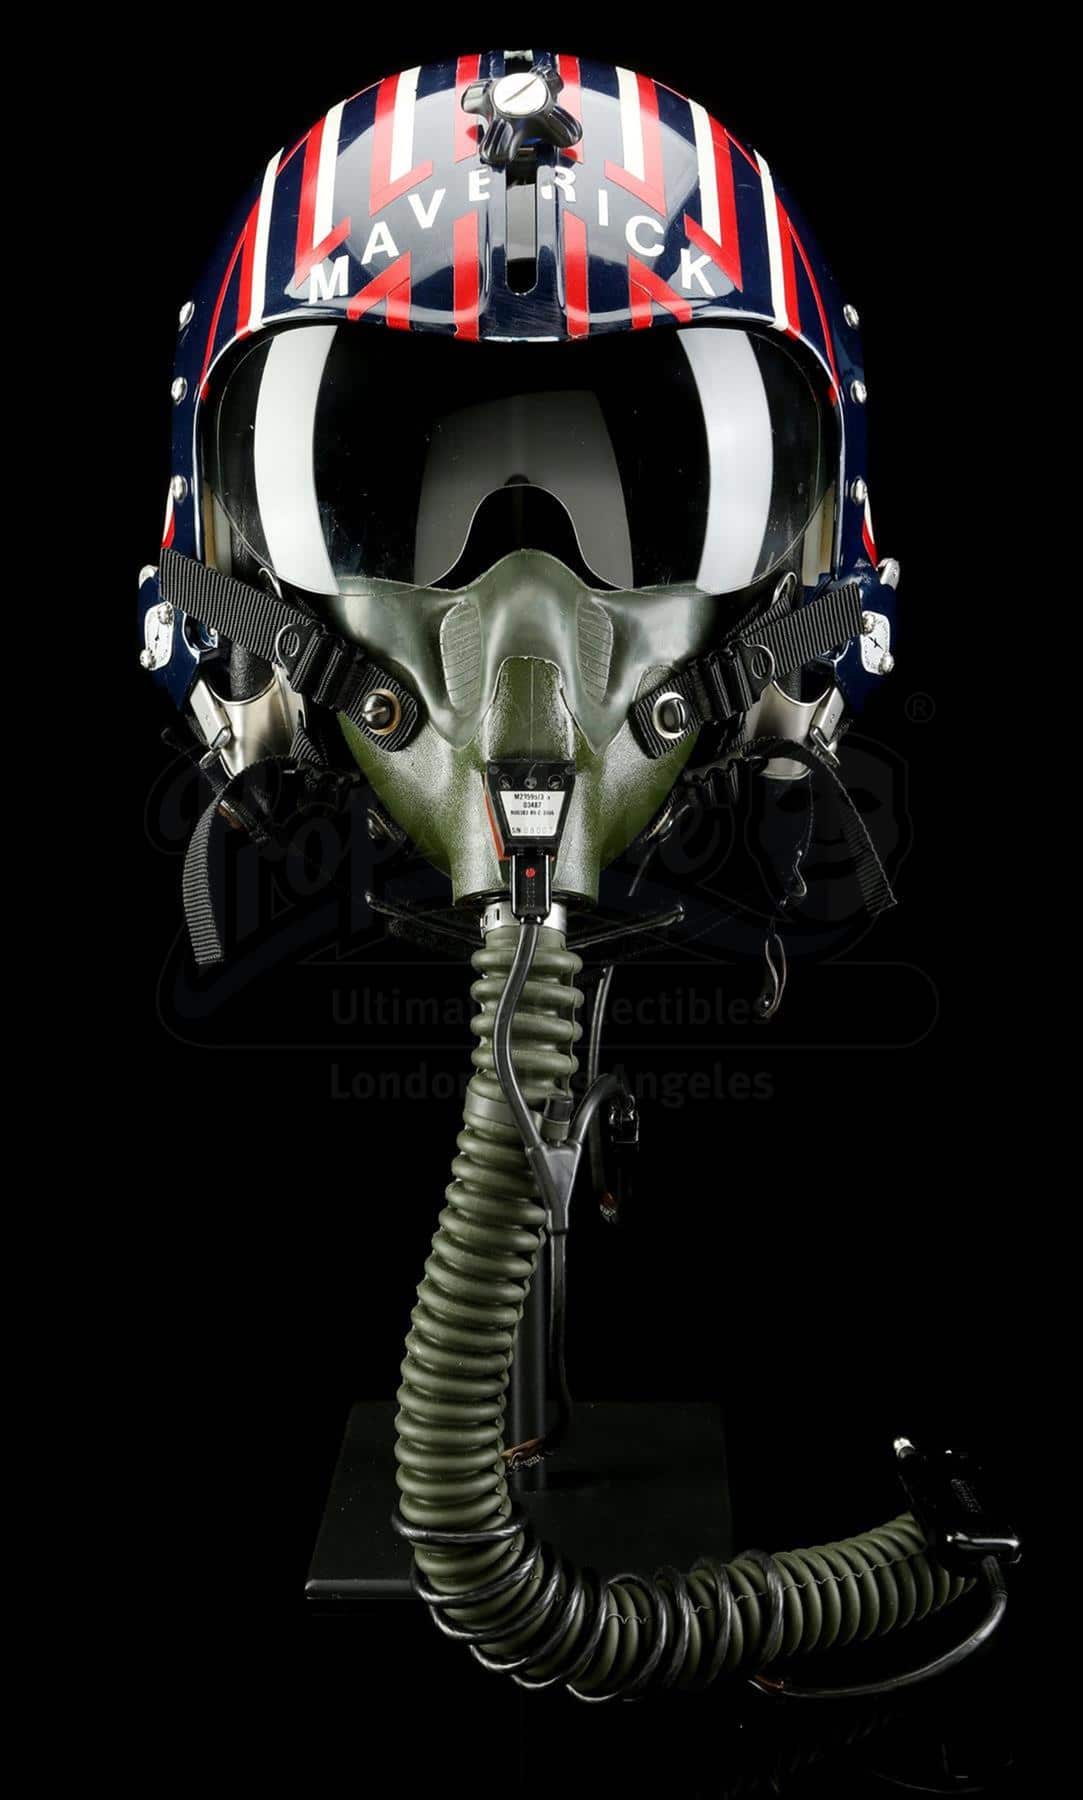 Top Gun - Maverick's Helmet